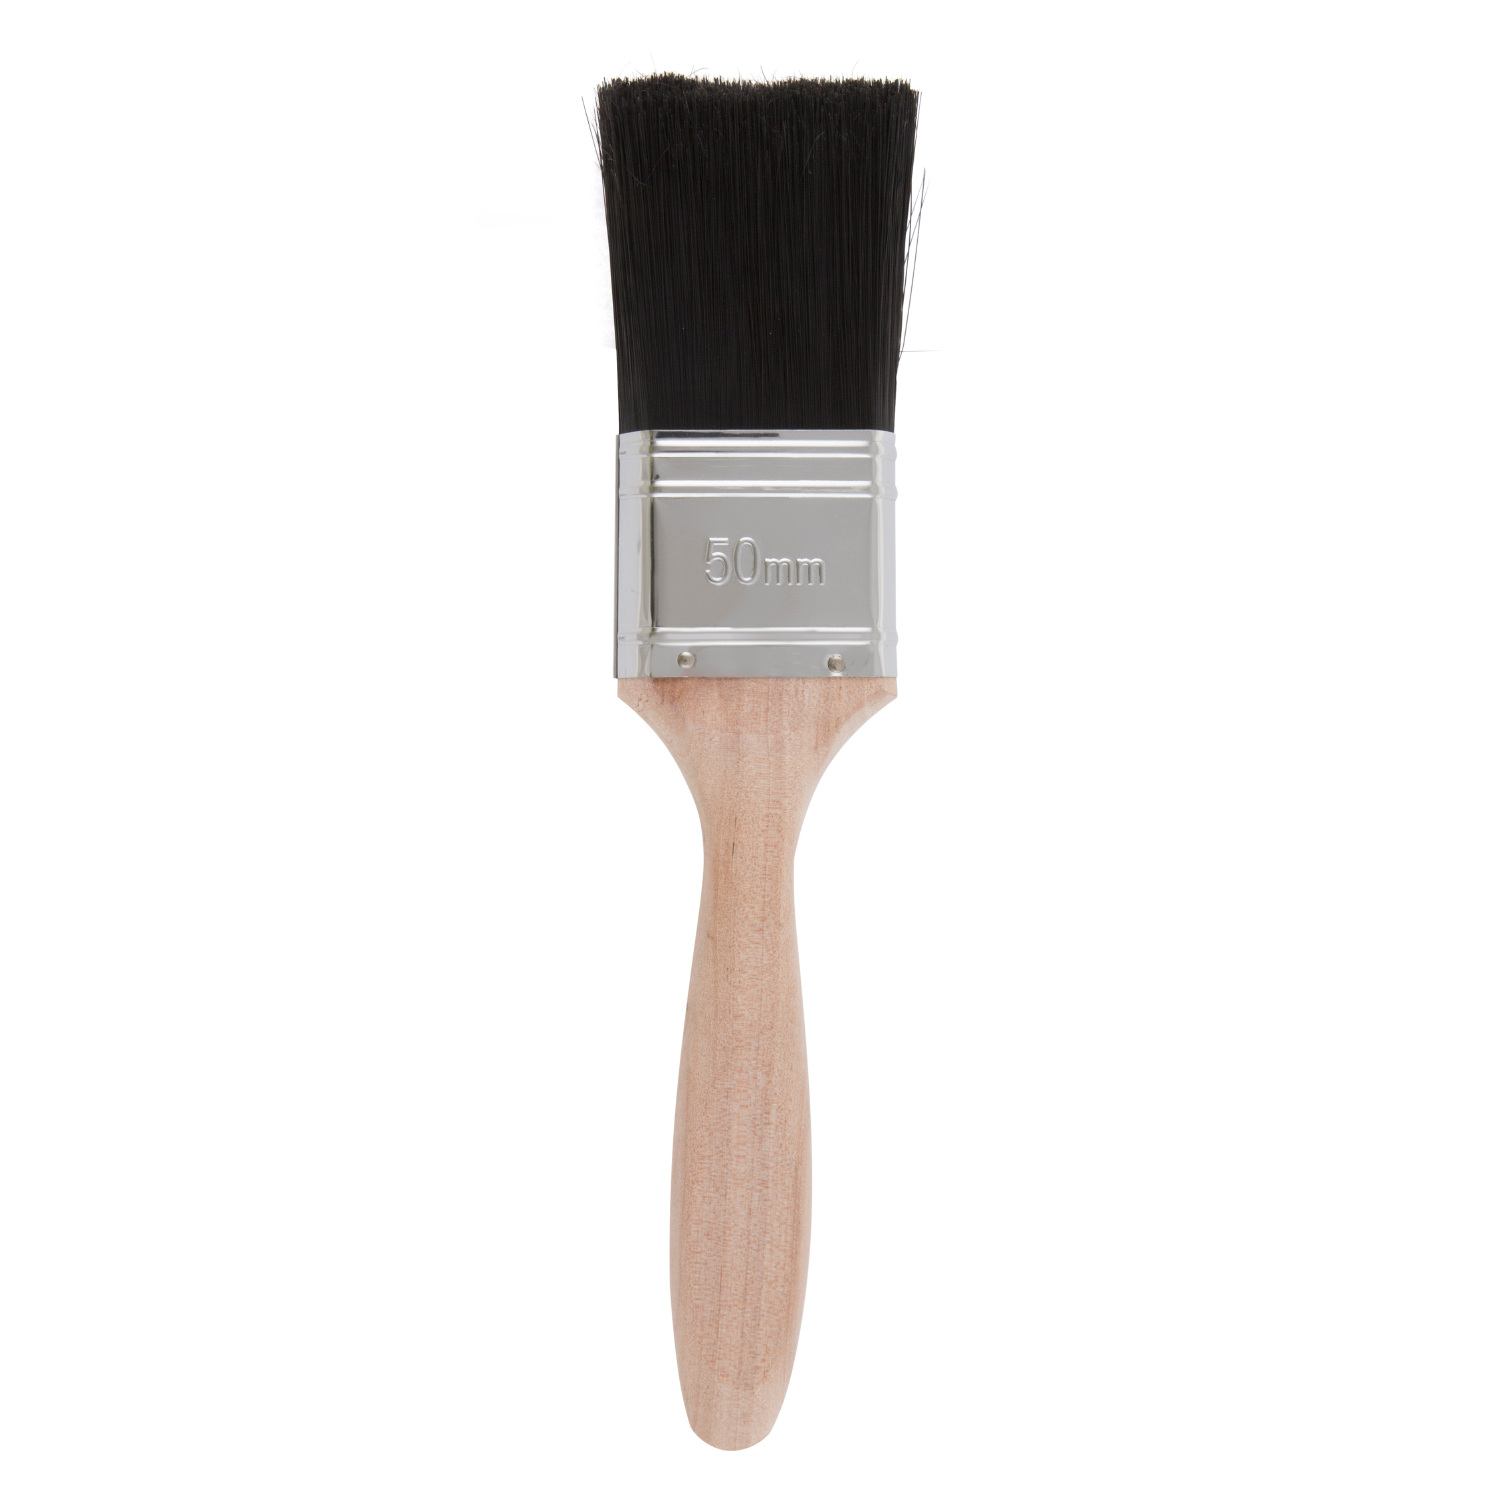 Prepare It 2 inch Professional Paint Brush Image 2